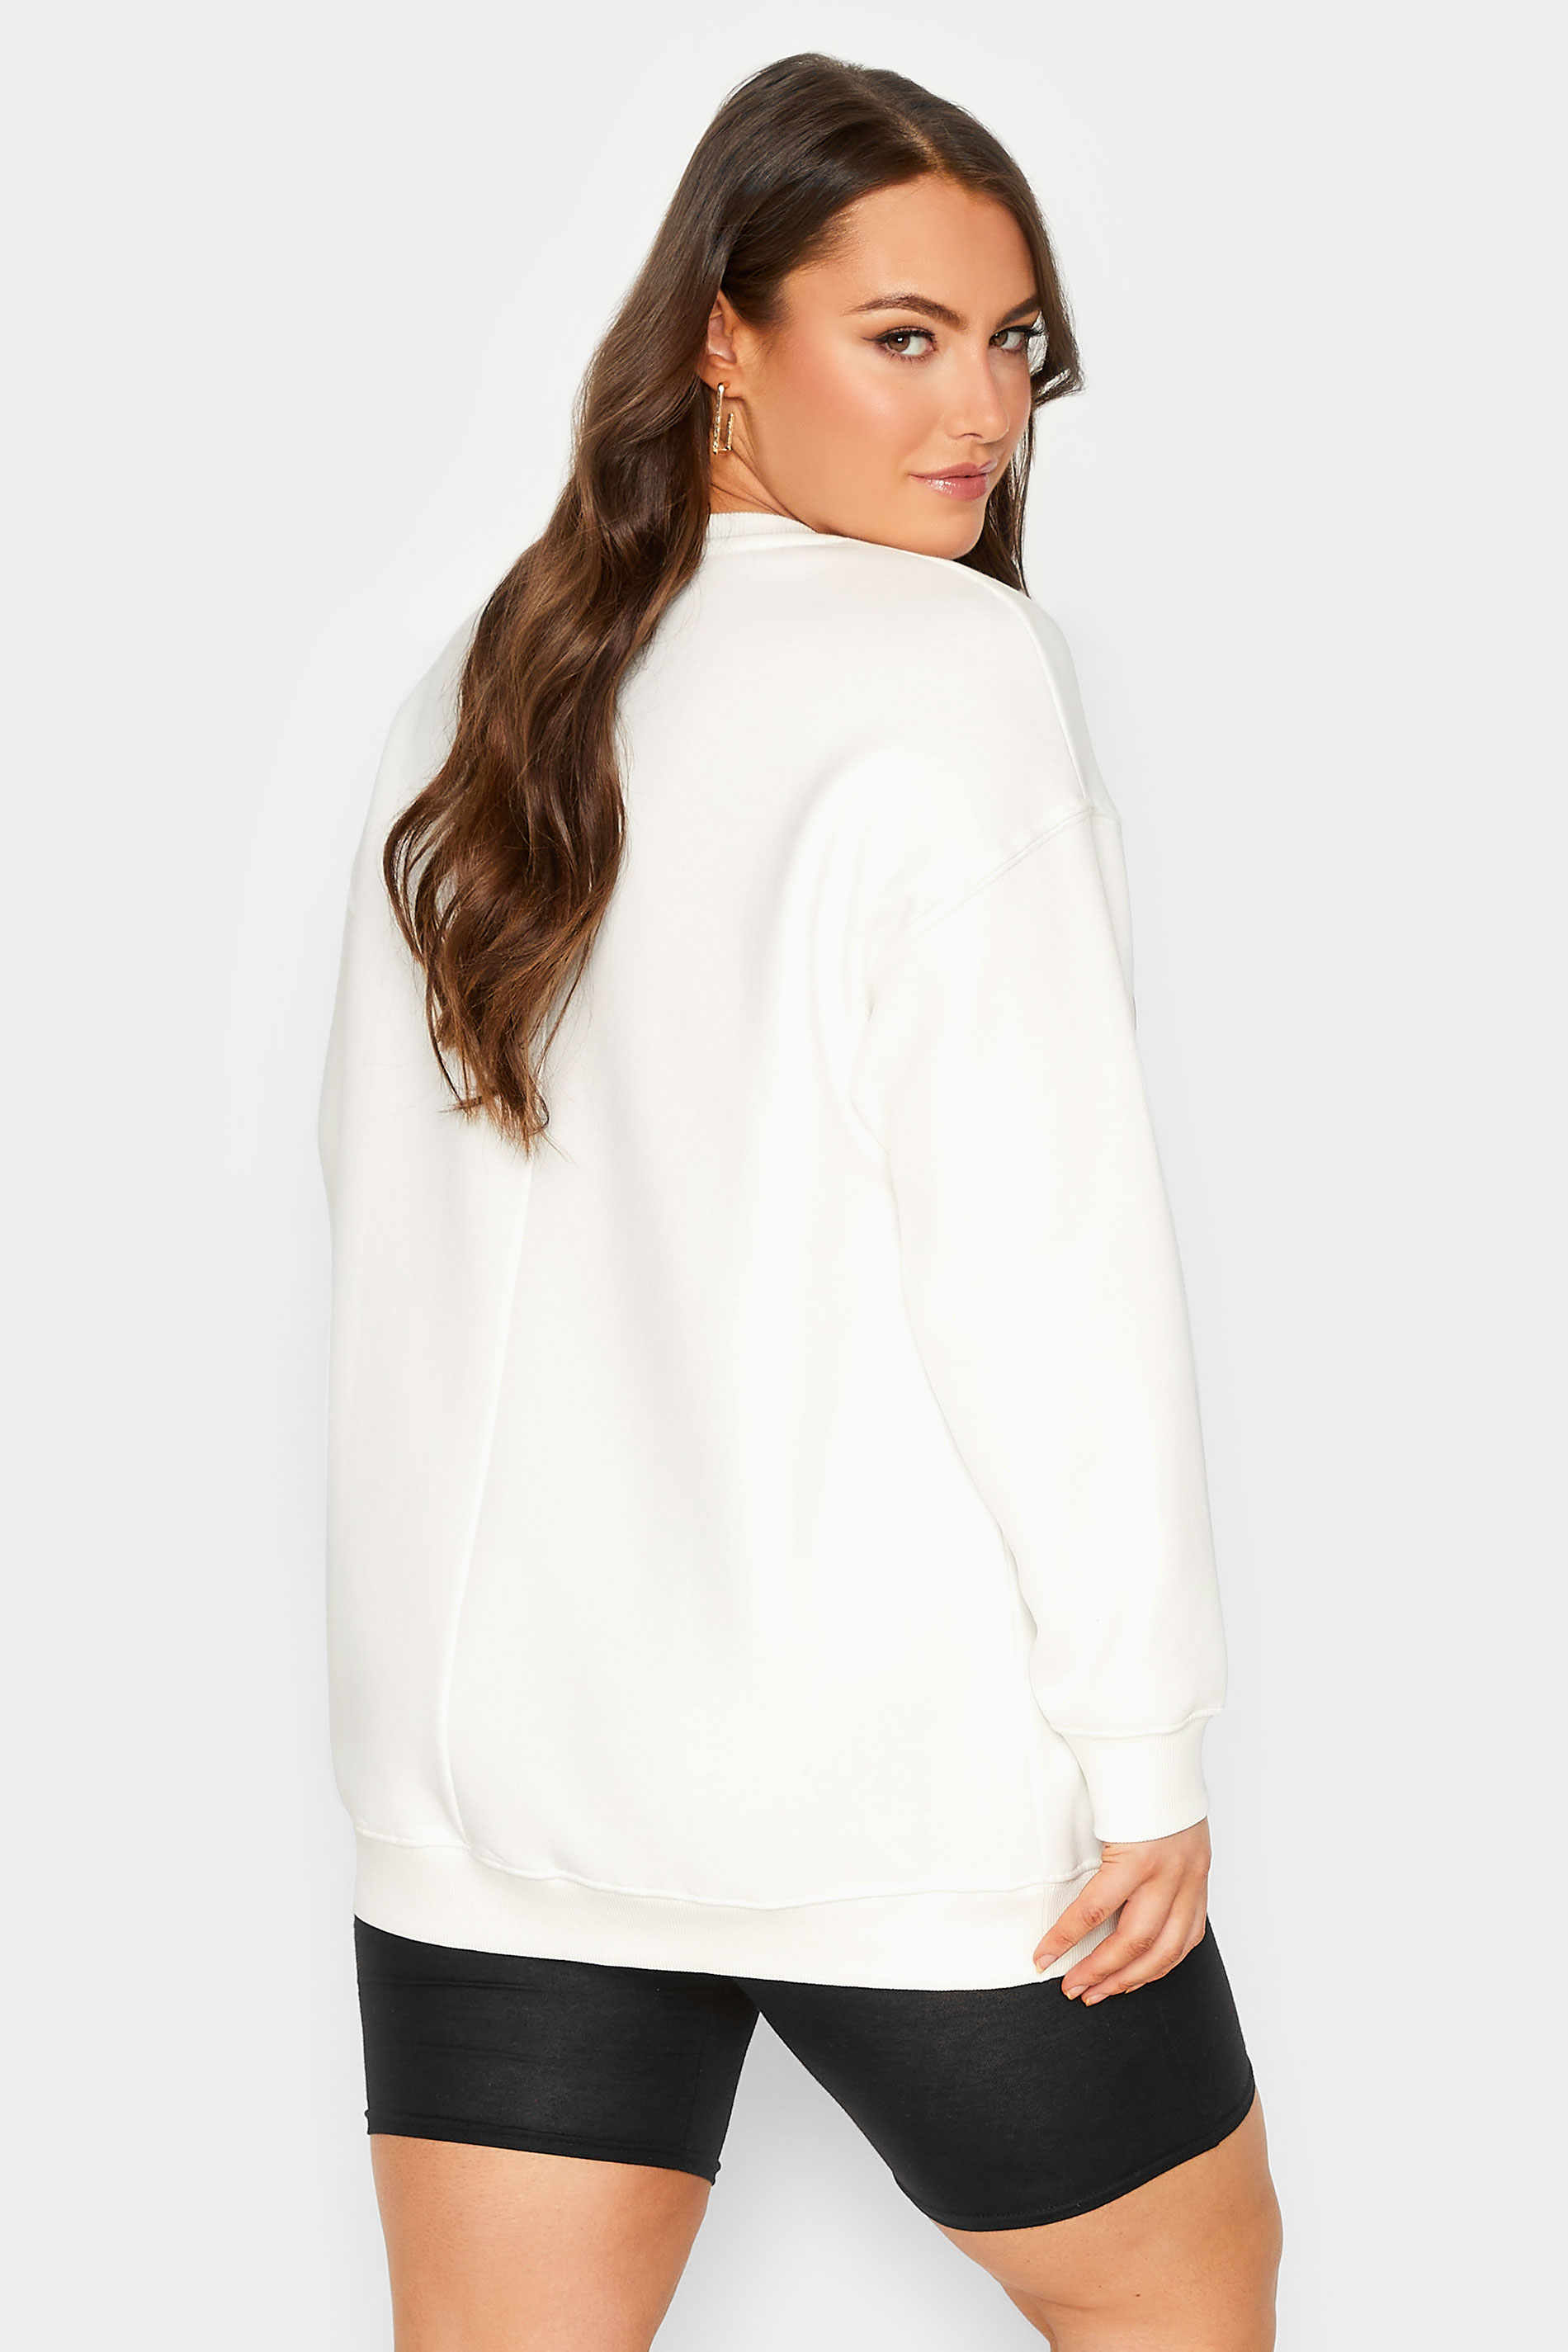 Plus Size Ivory White 'San Diego' Printed Slogan Sweatshirt